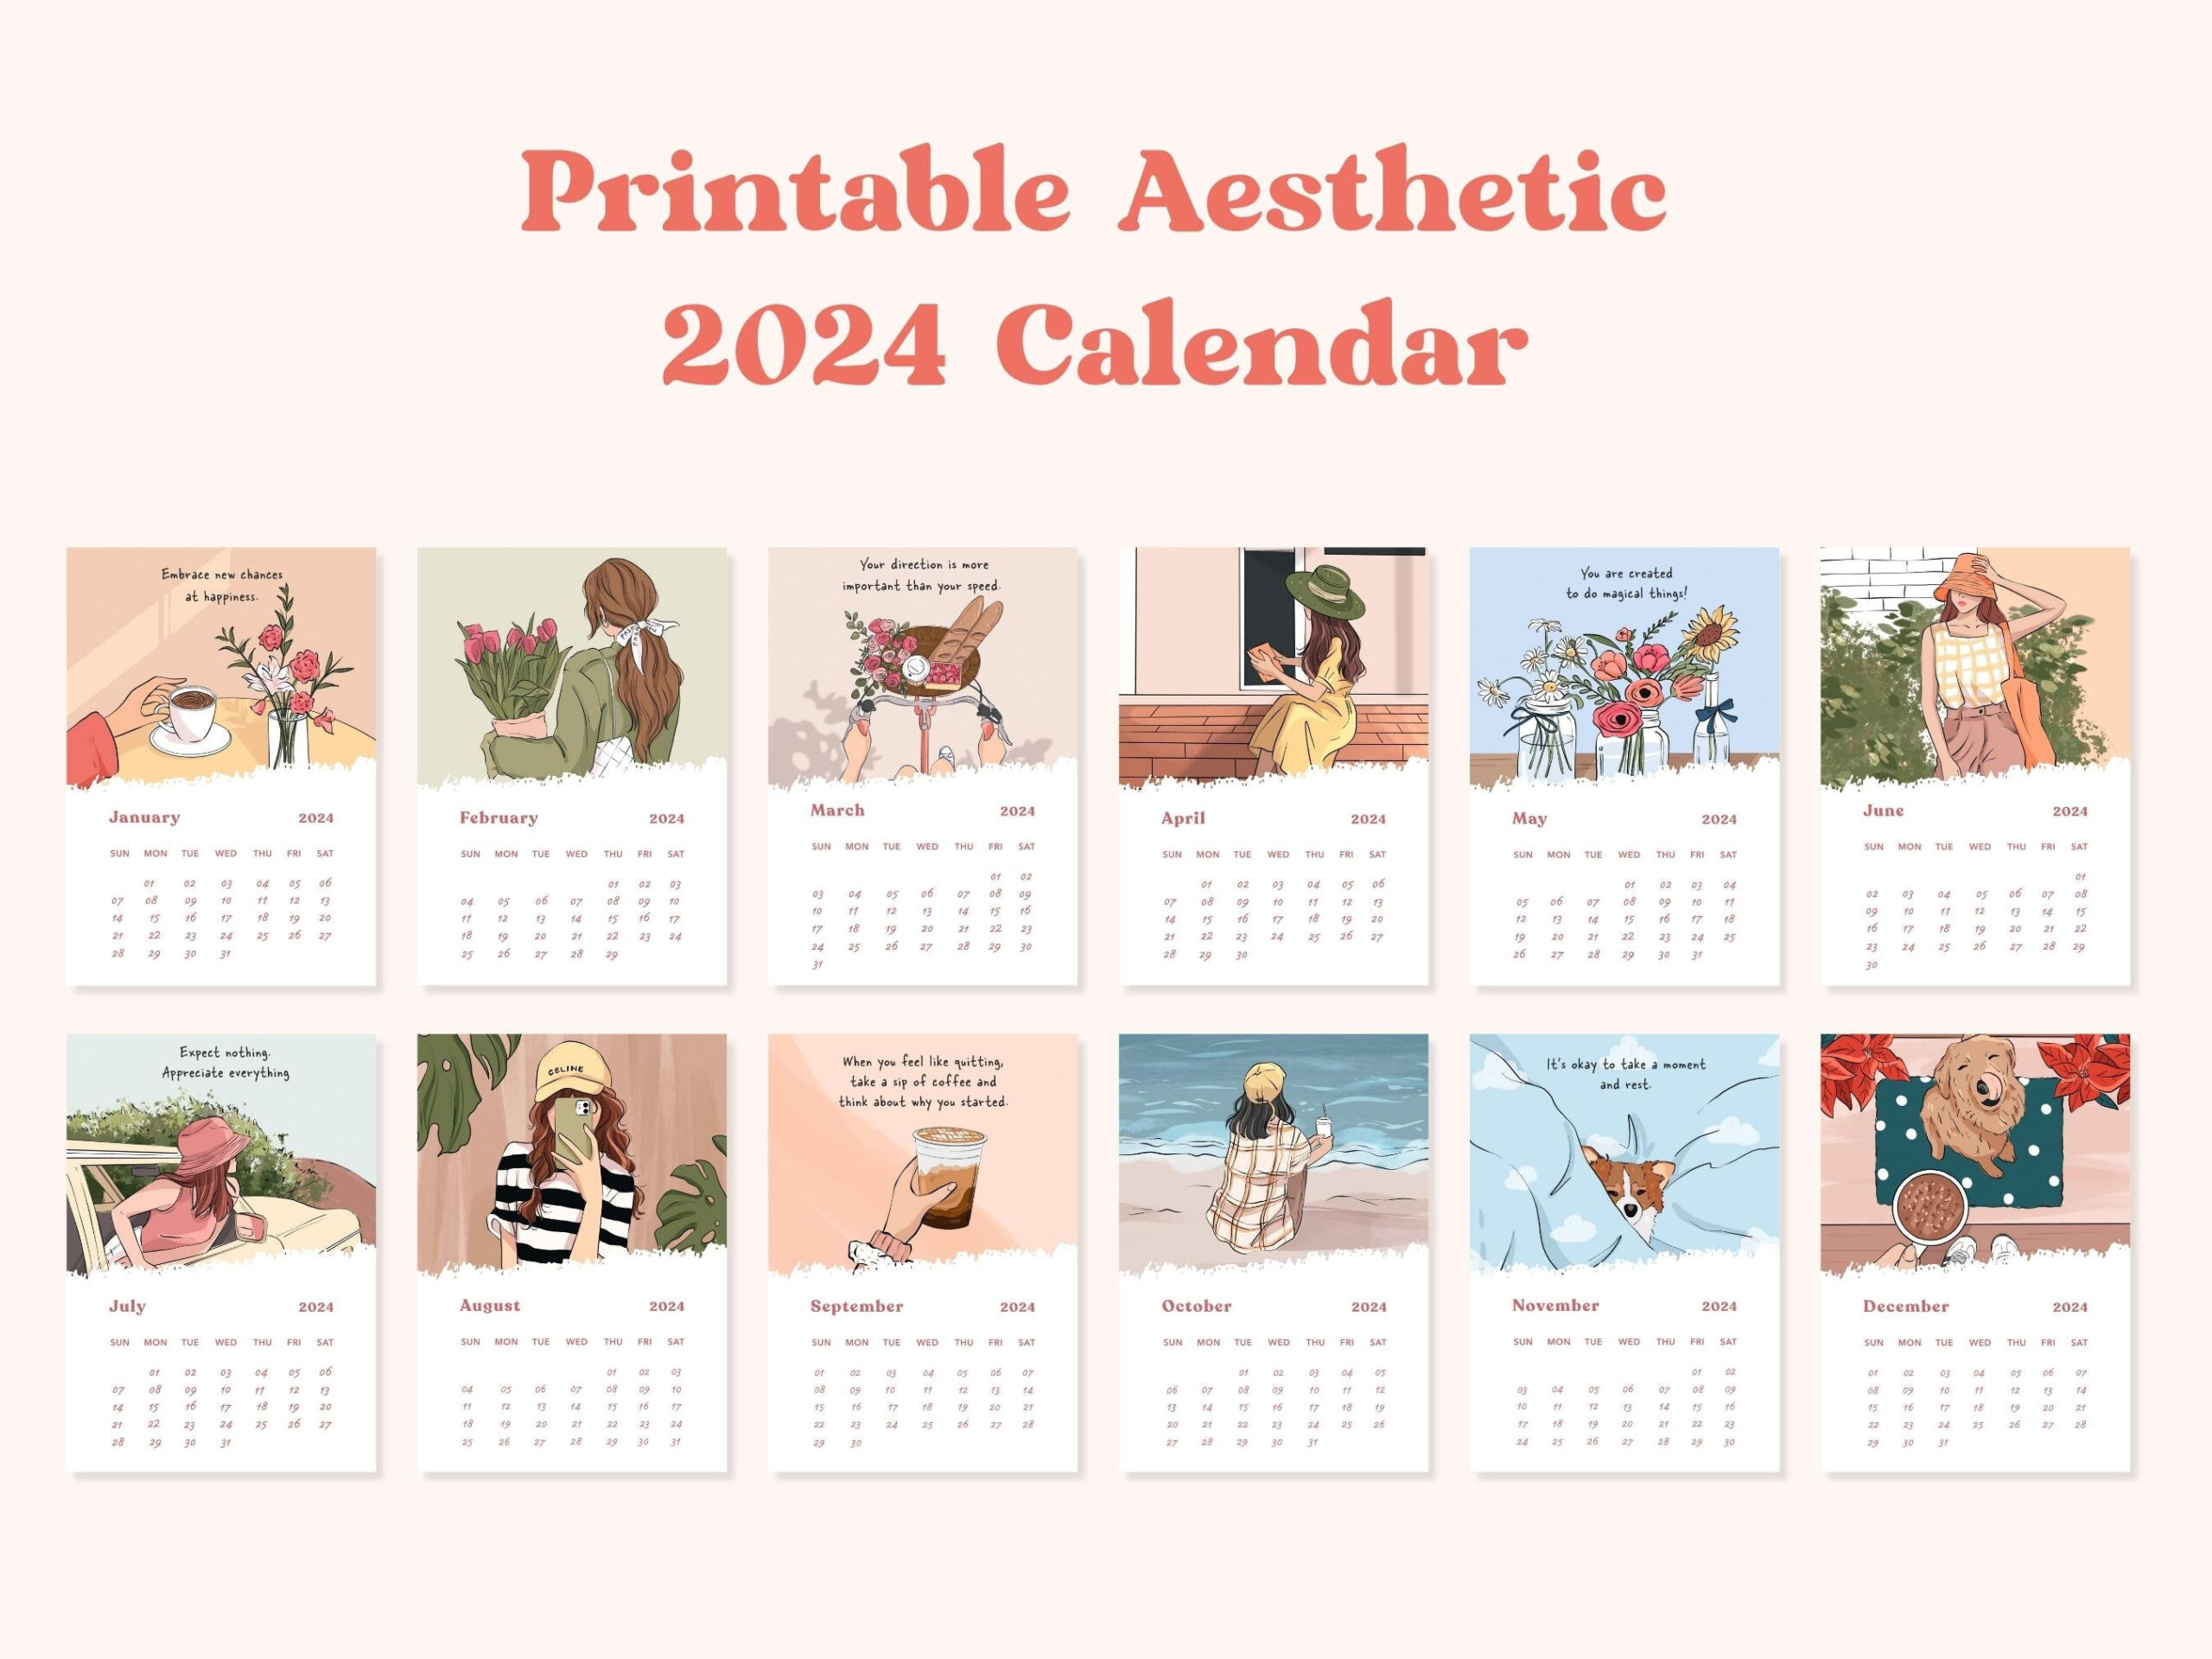 Printable Calendar 2024 Aesthetic | Printable Calendar 2024